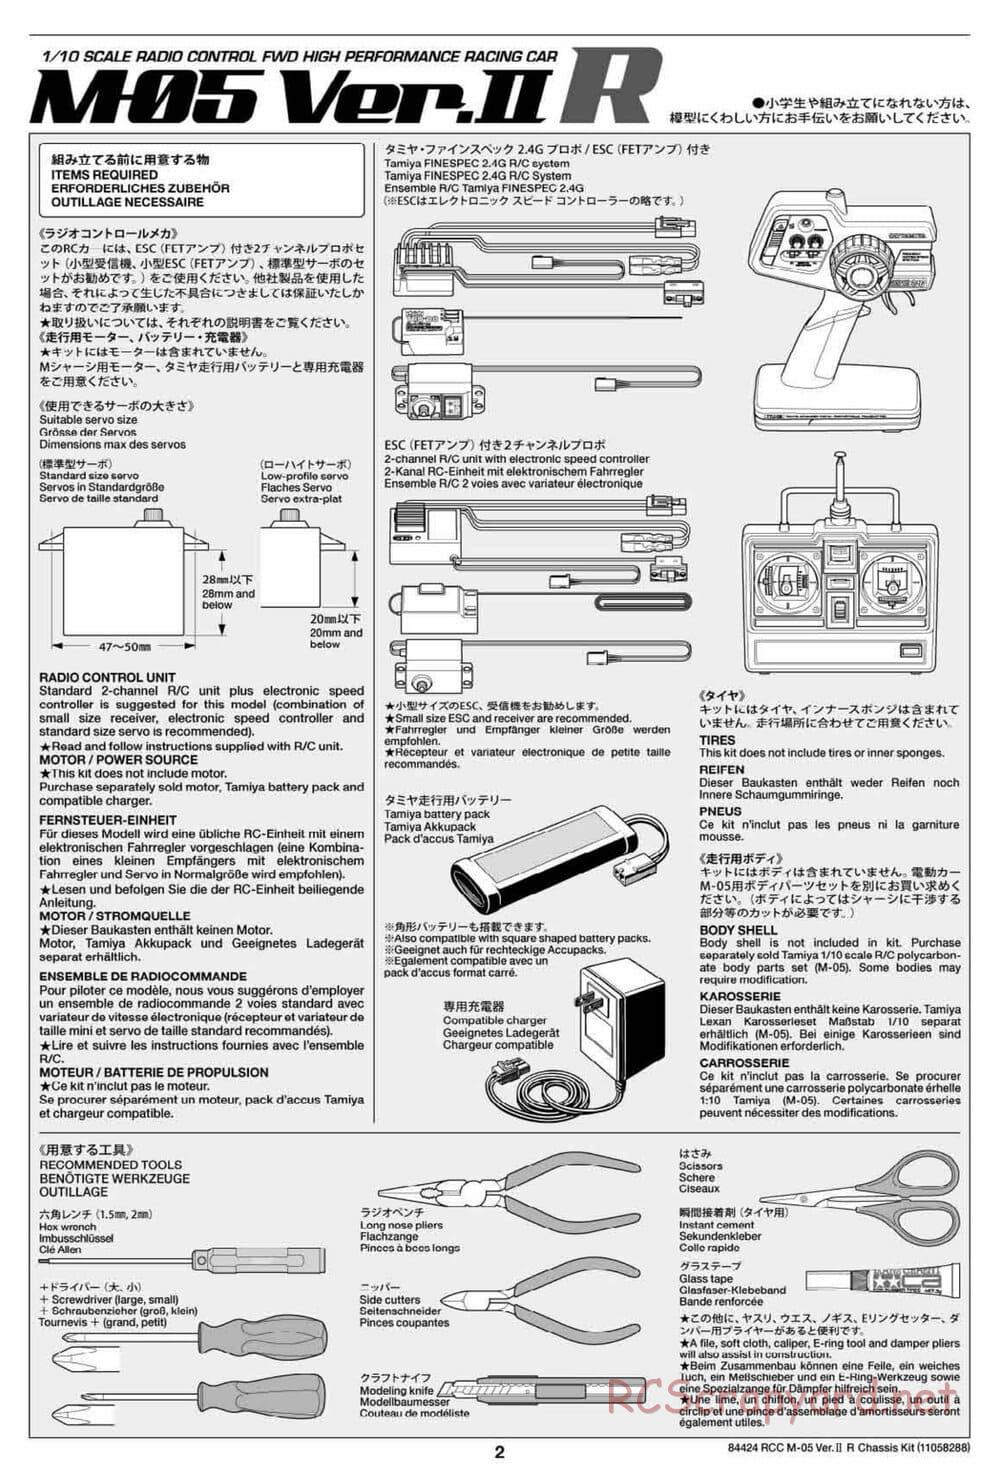 Tamiya - M-05 Ver.II R Chassis Chassis - Manual - Page 2